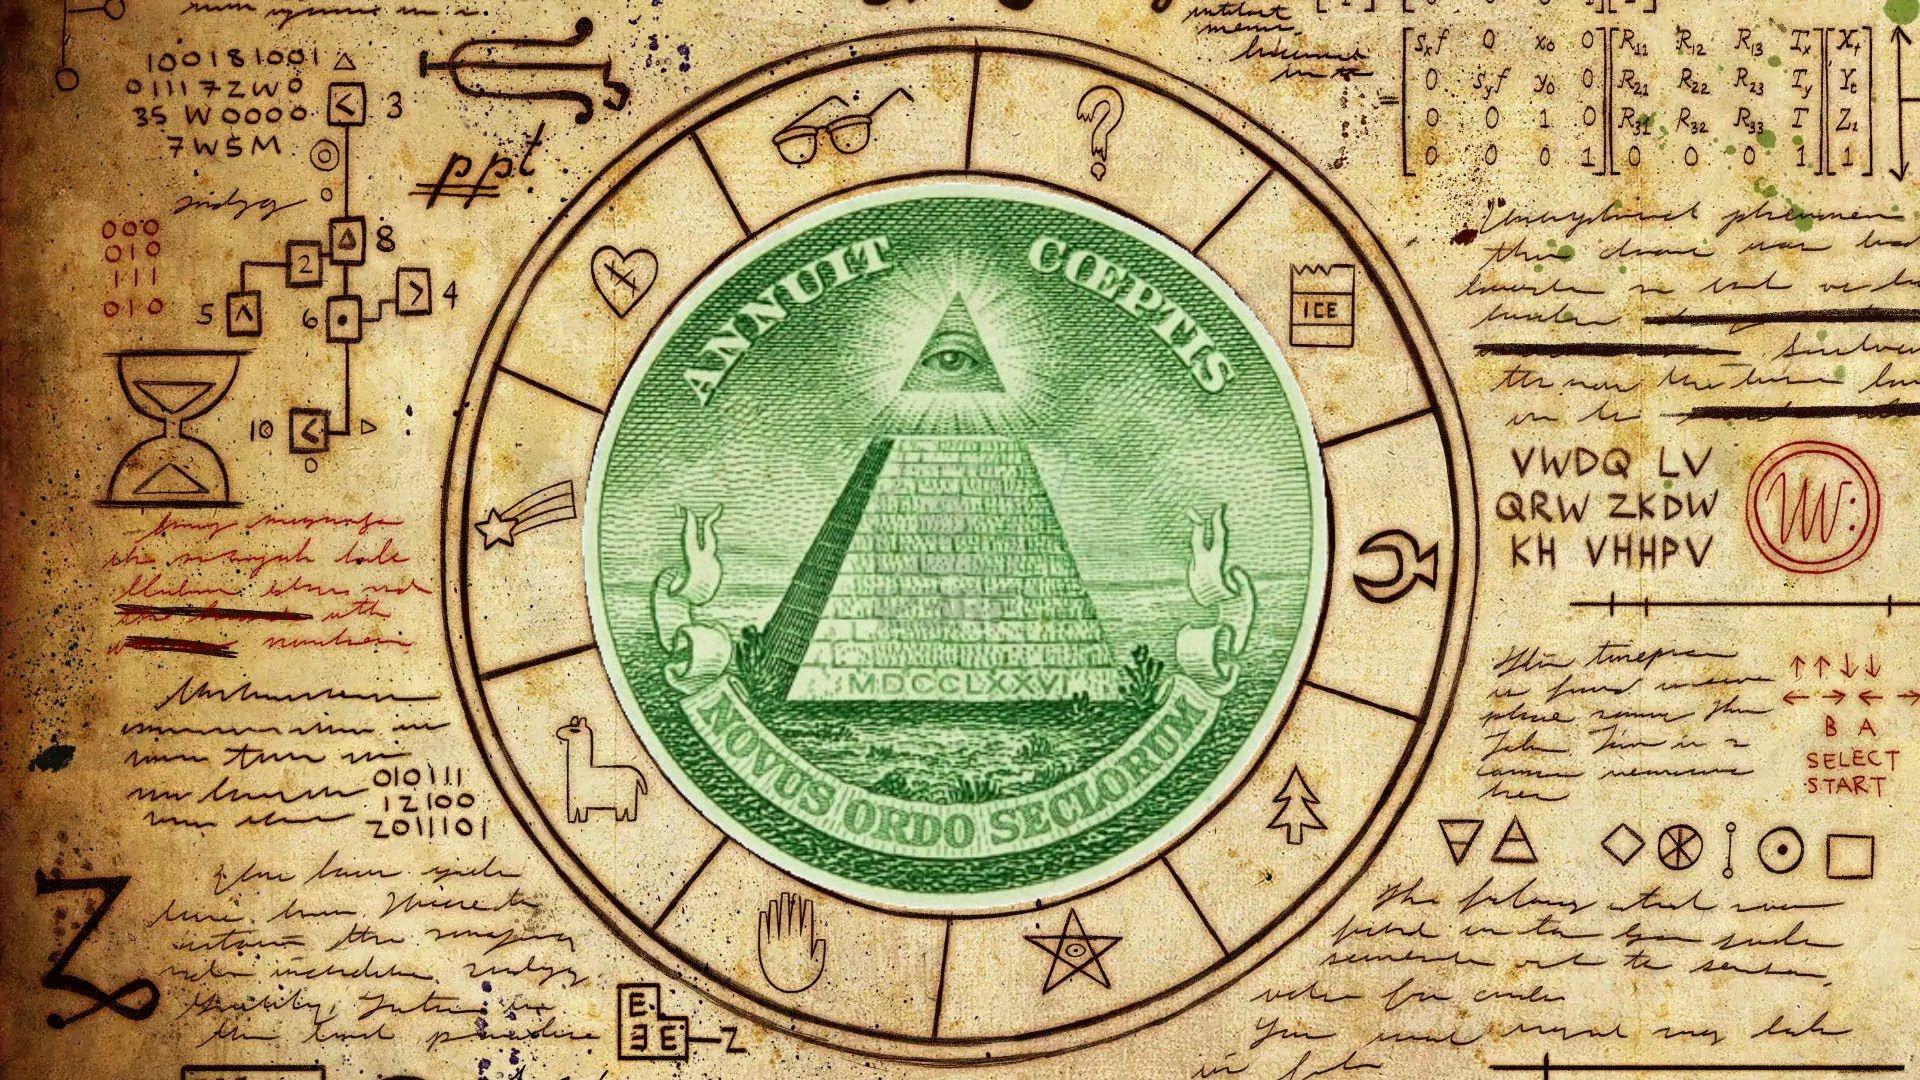 Illuminati Wallpaper